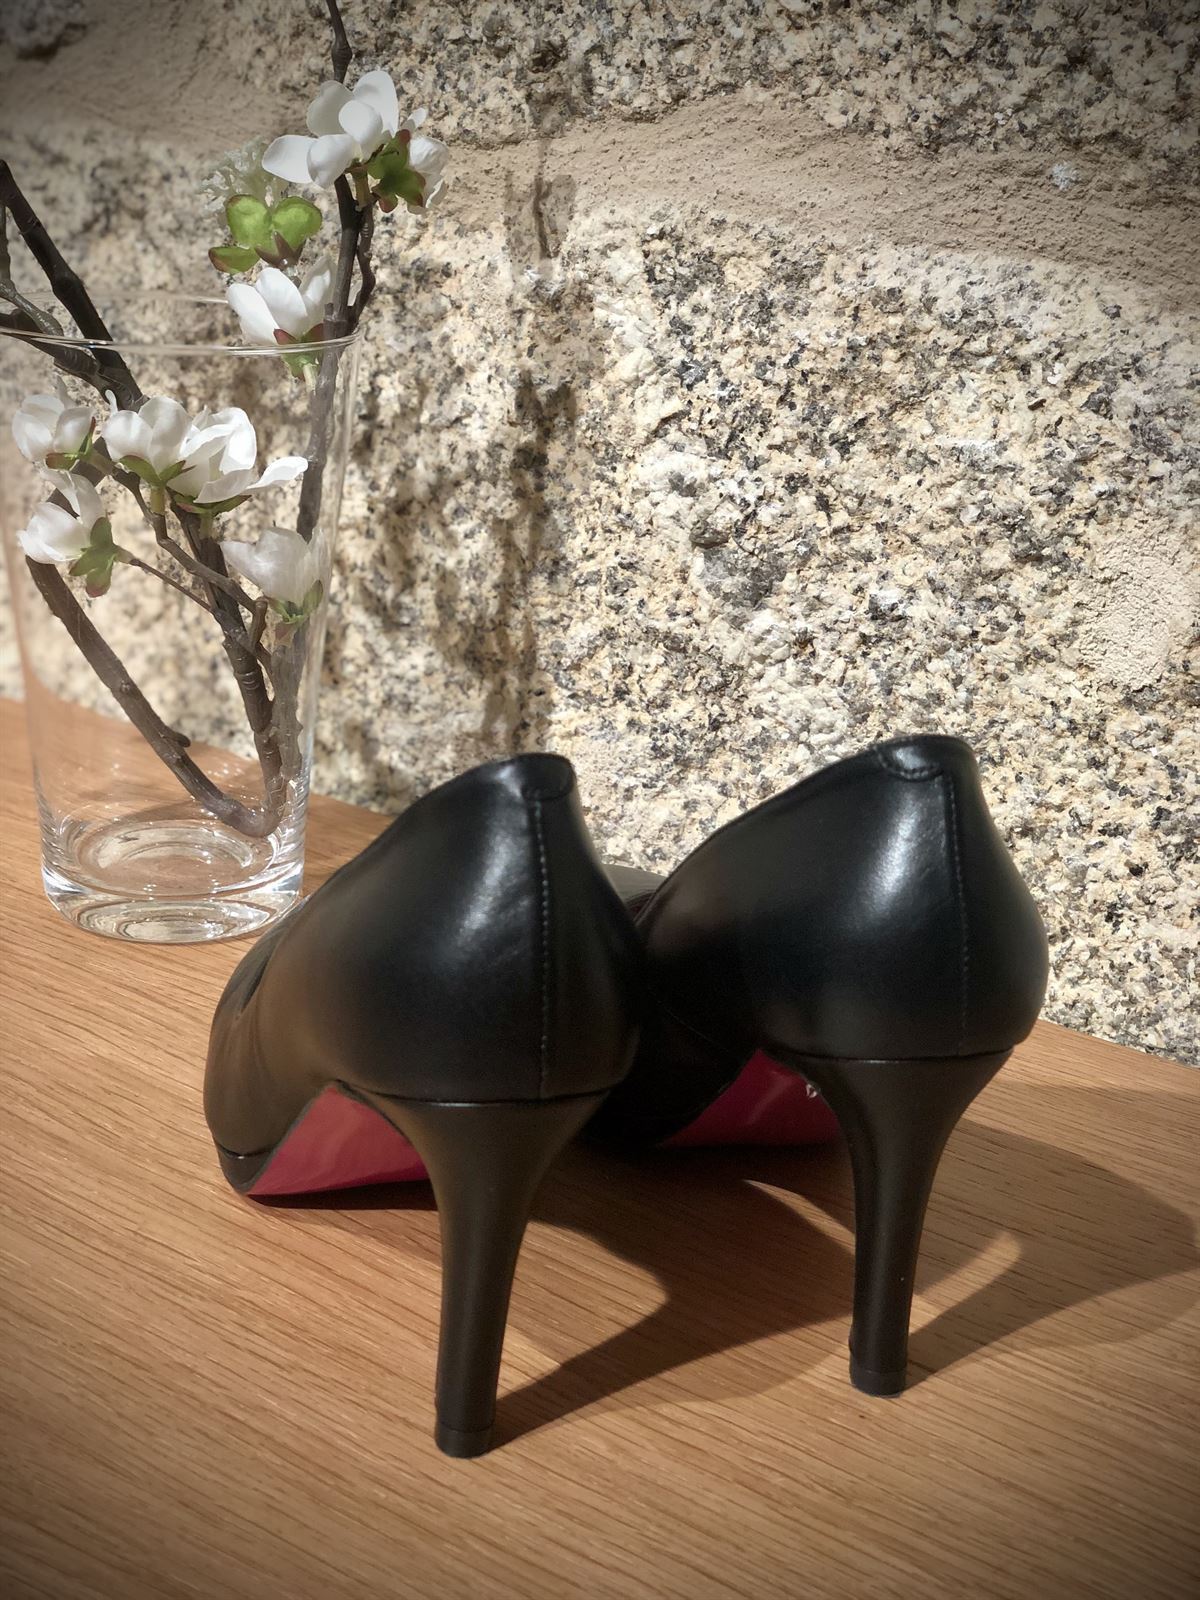 Zapato Angari negro piel - Imagen 2